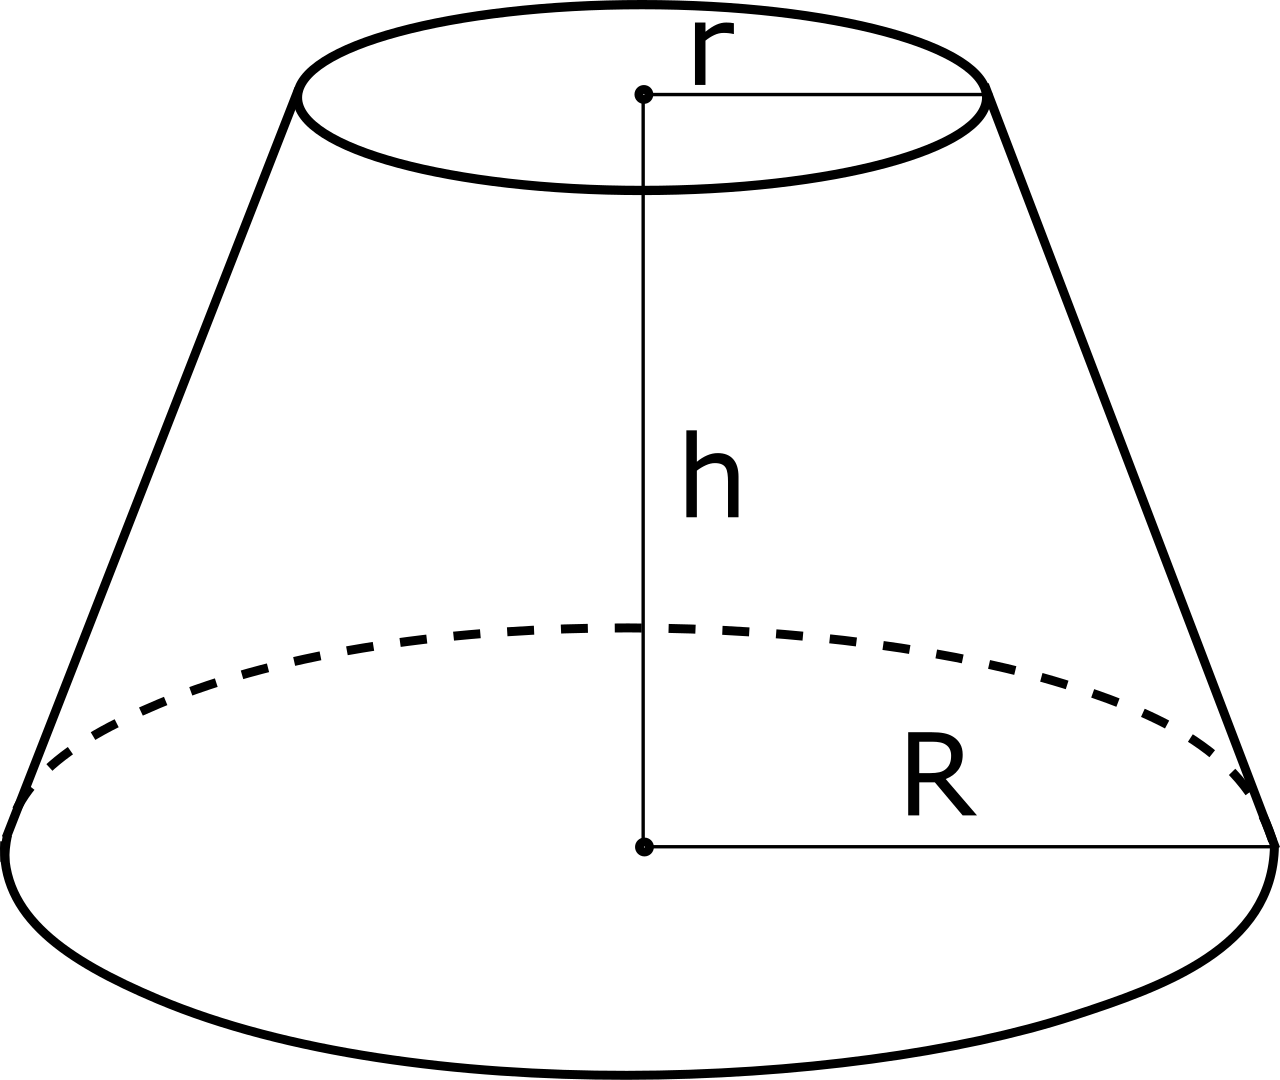 Diagram of a frustum showing R = base radius, r = top radius, and h = height